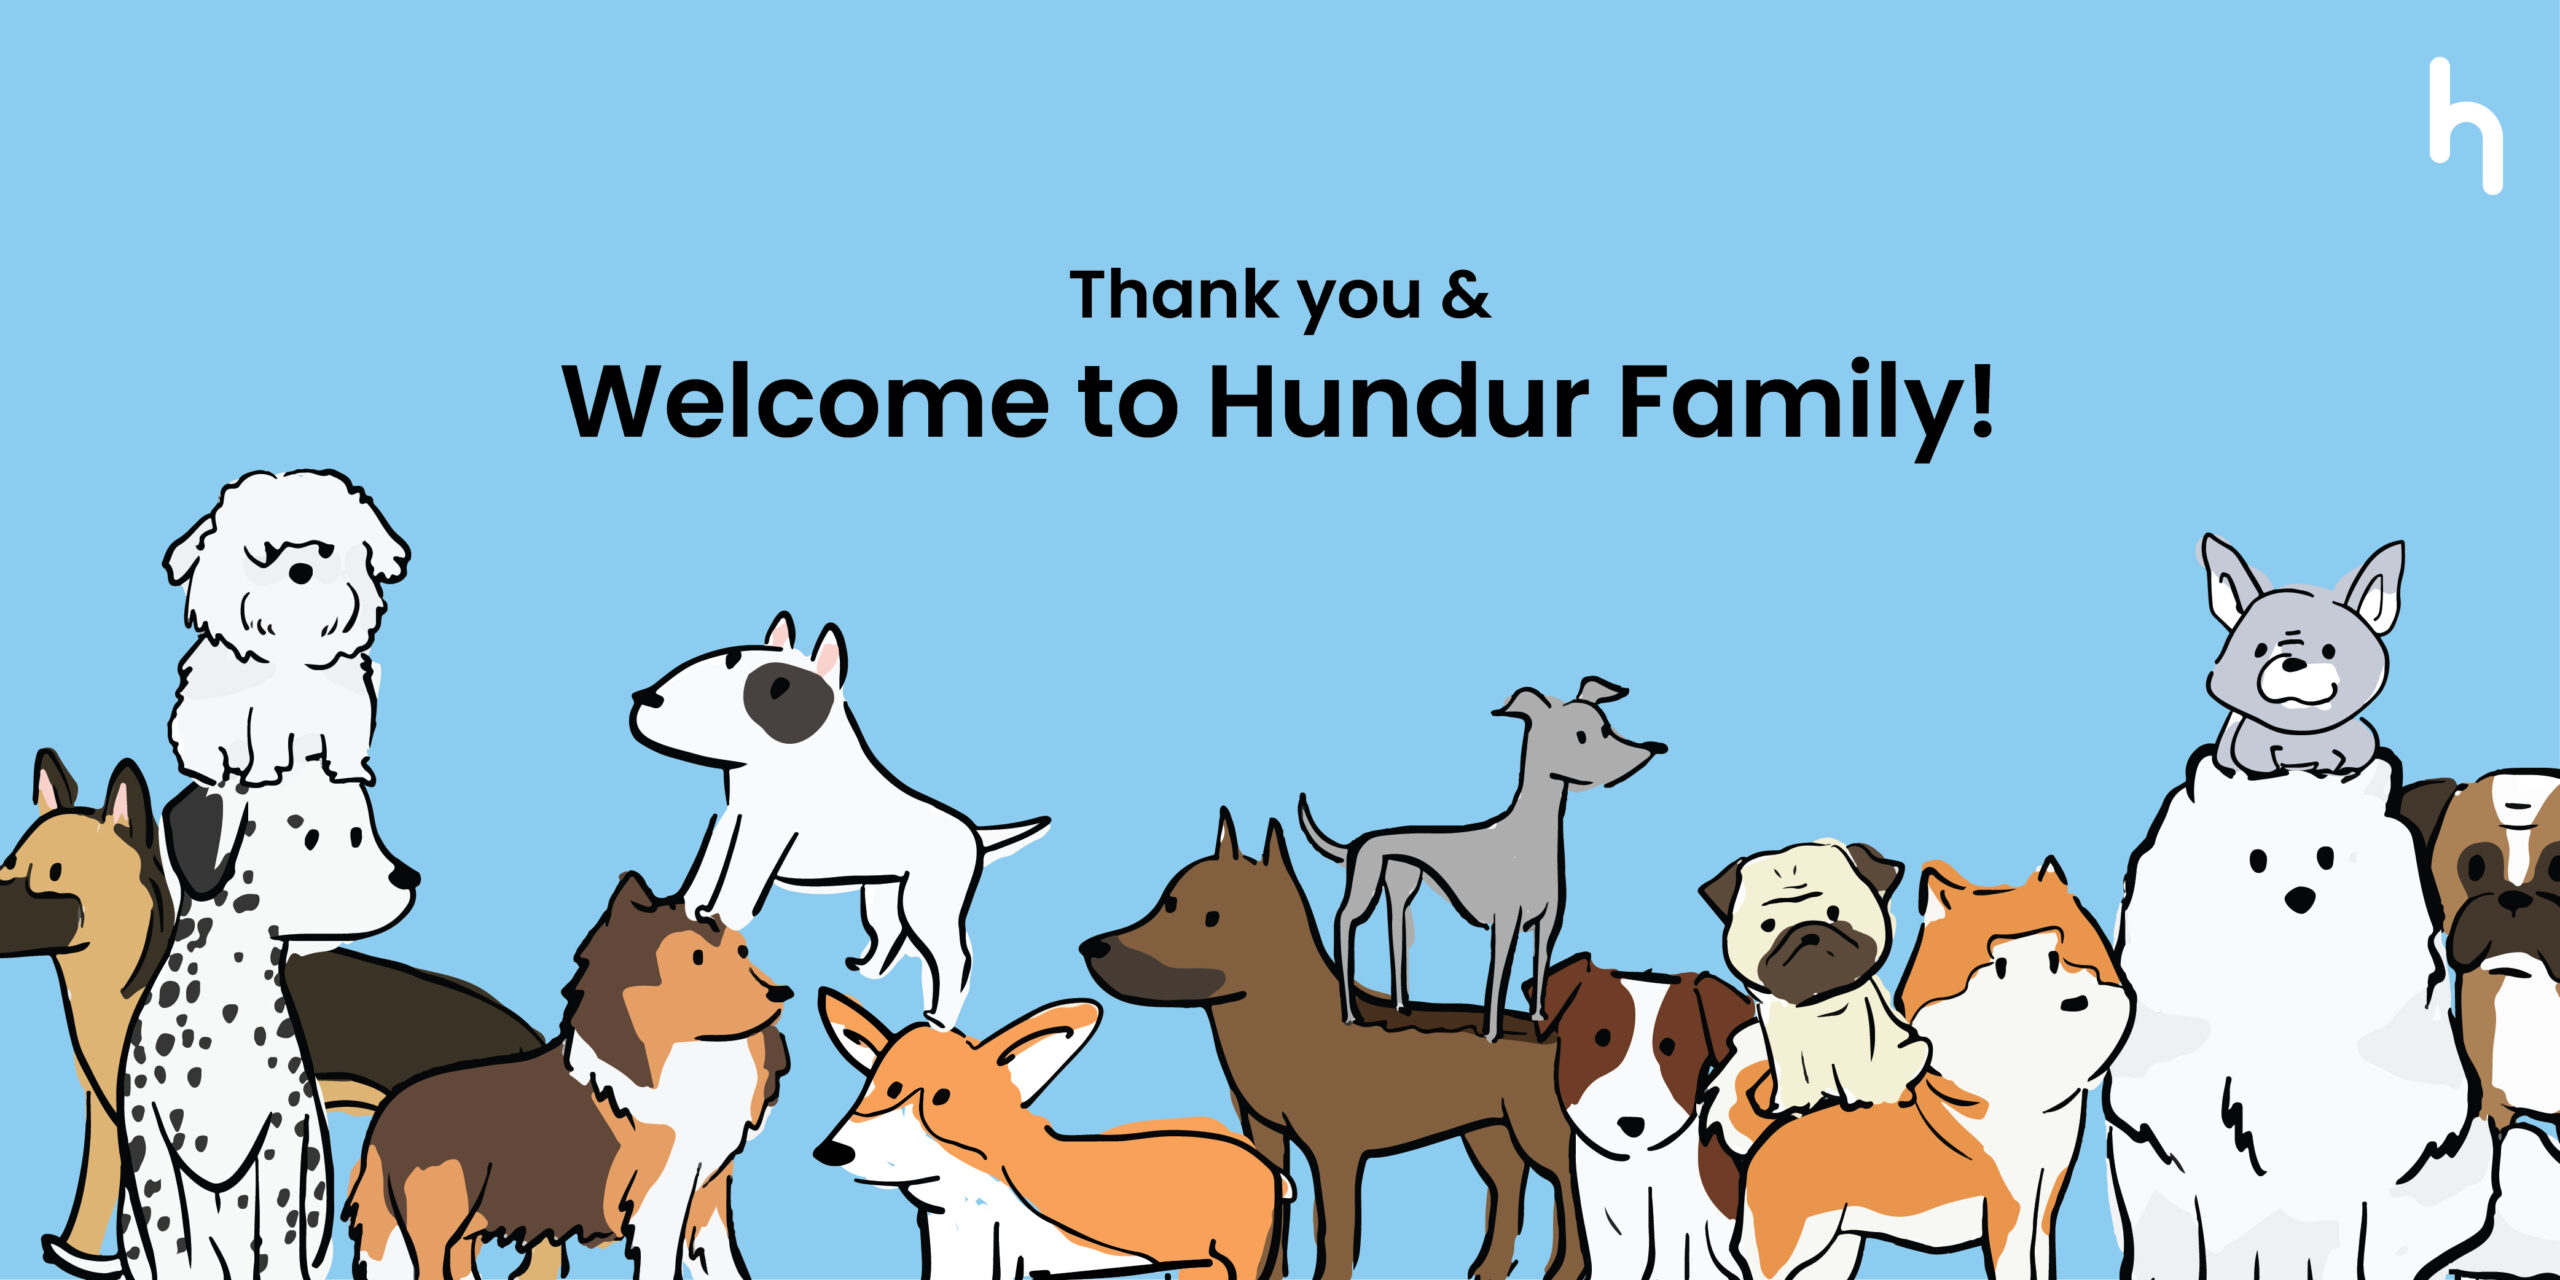 Welcome everyone to the Hundur Community!